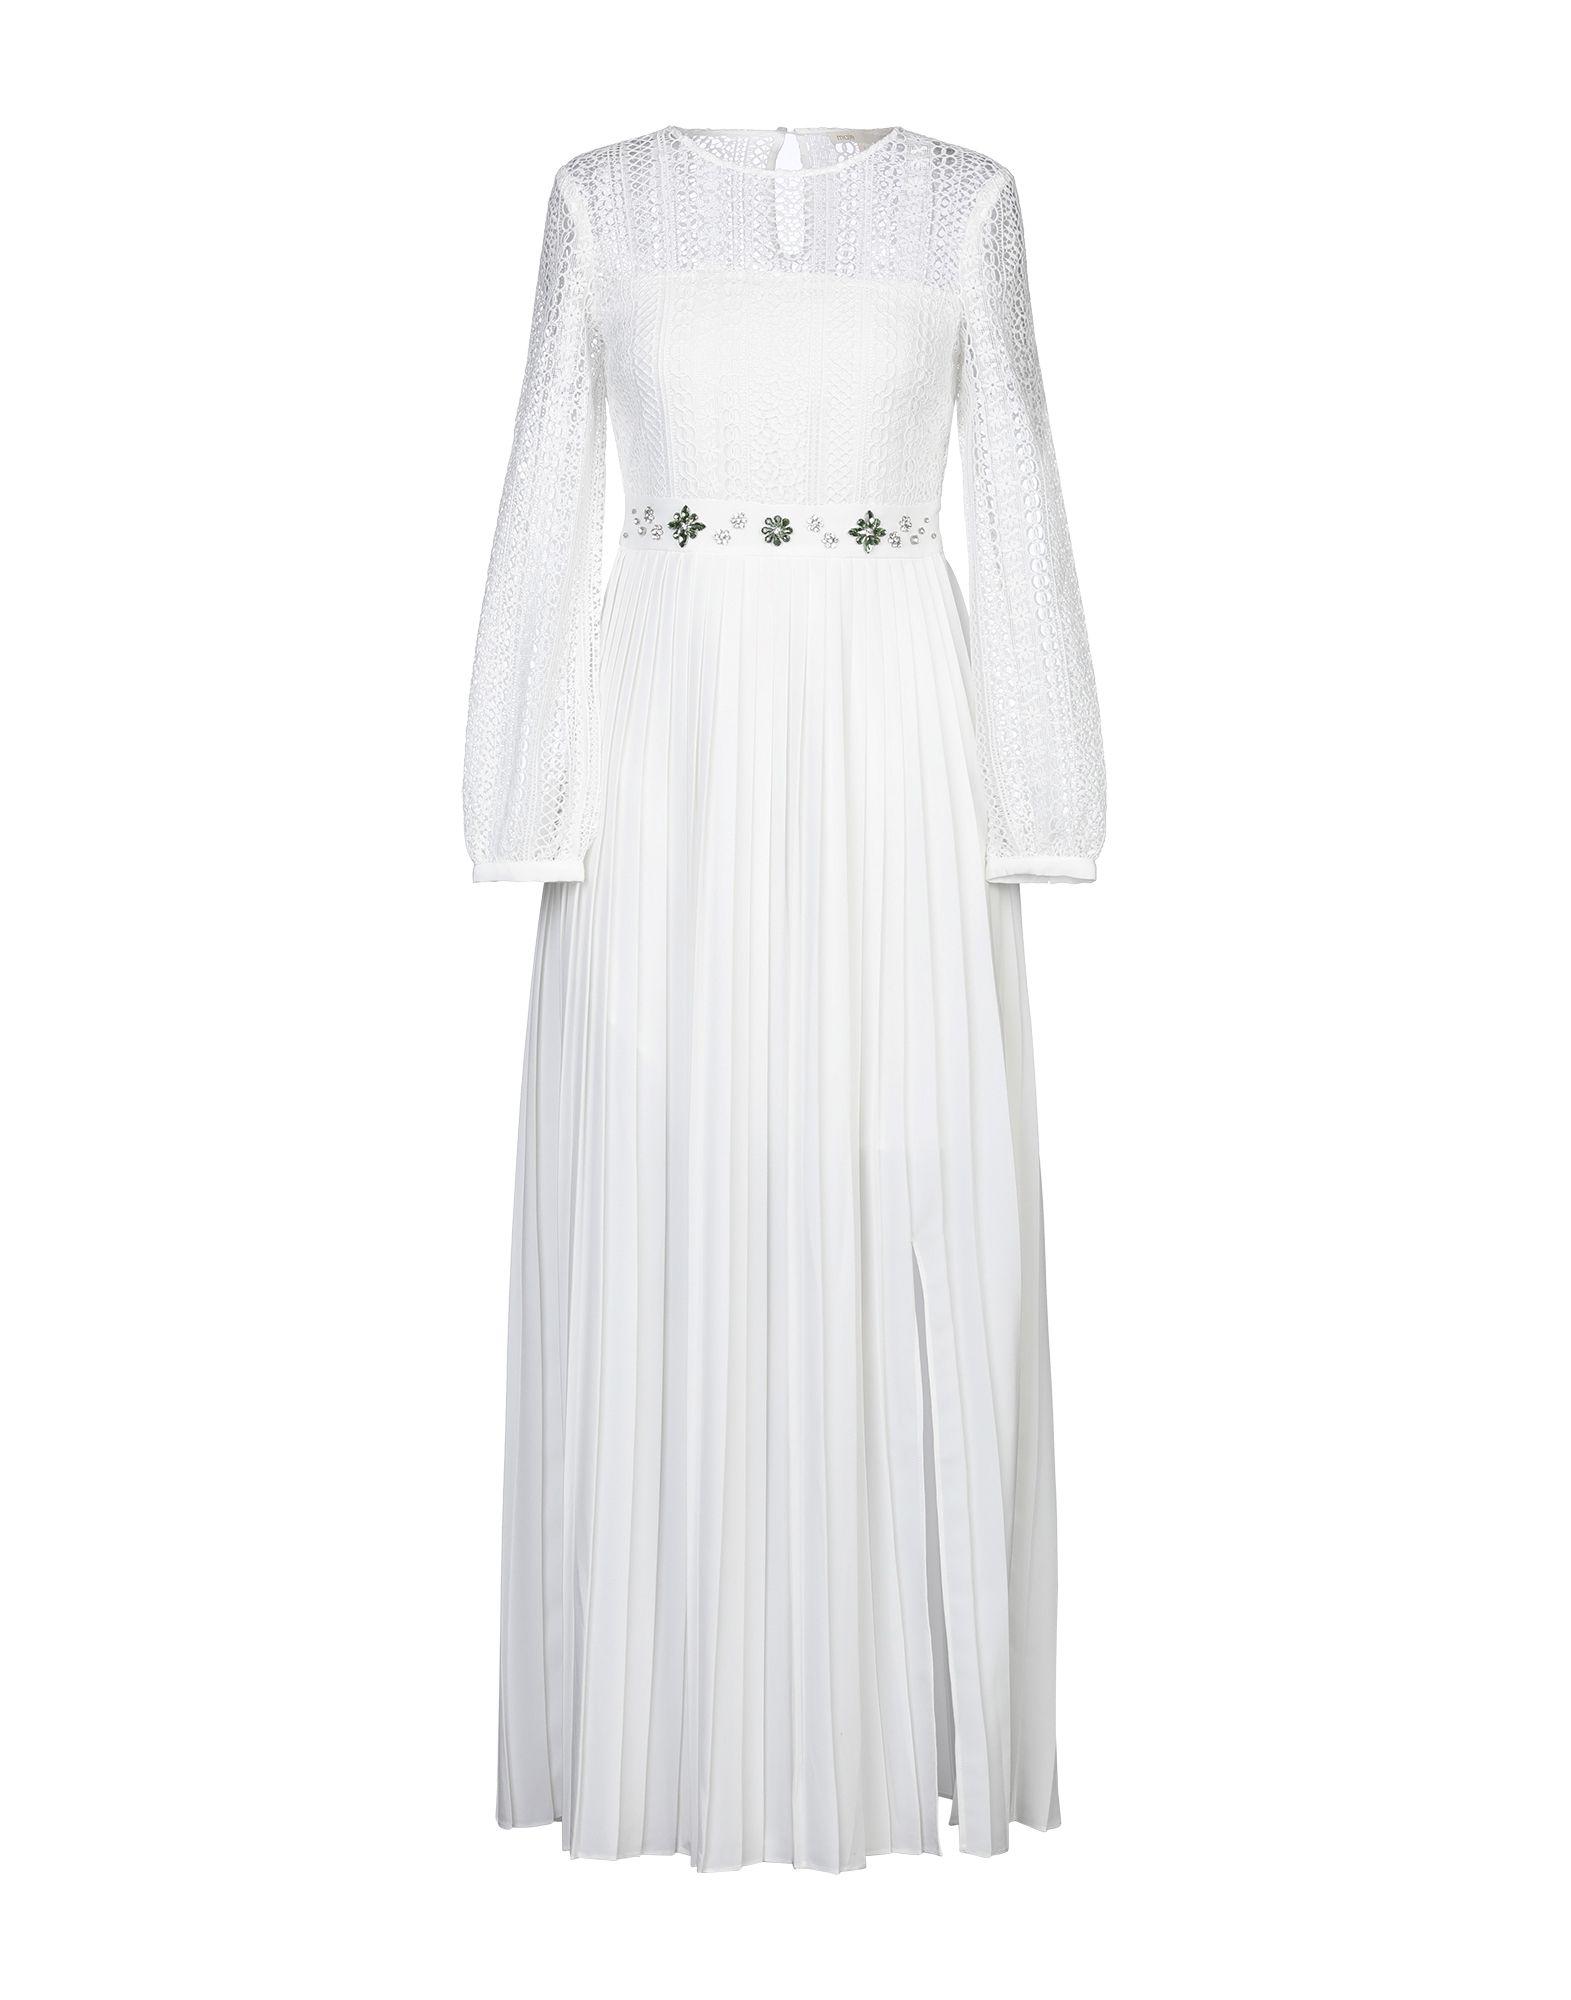 Maje Lace Long Dress in White - Lyst